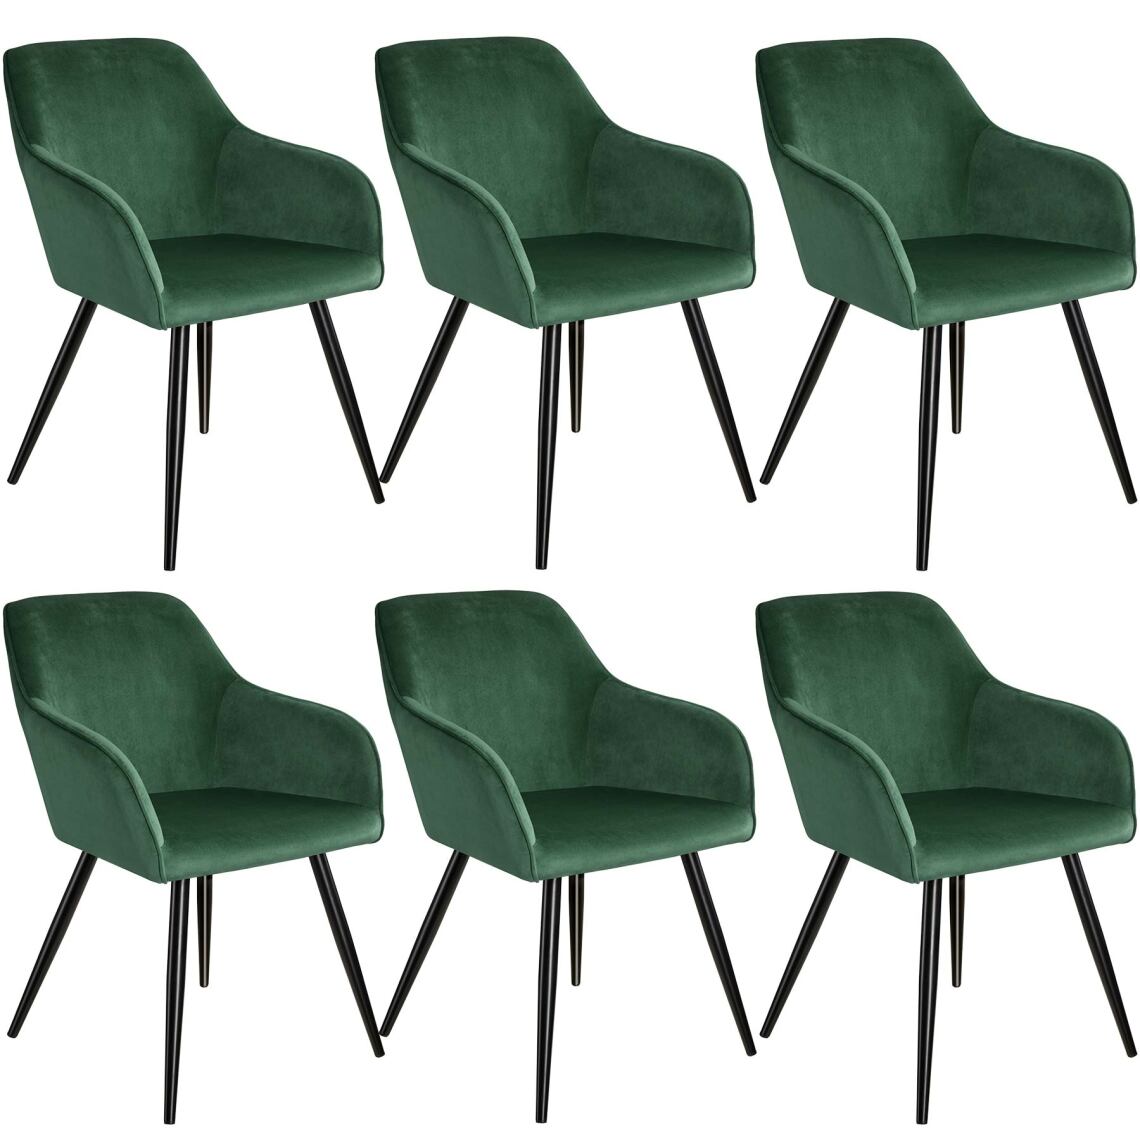 Tectake - 6 Chaises MARILYN Design en Velours Style Scandinave - vert foncé/noir - Chaises